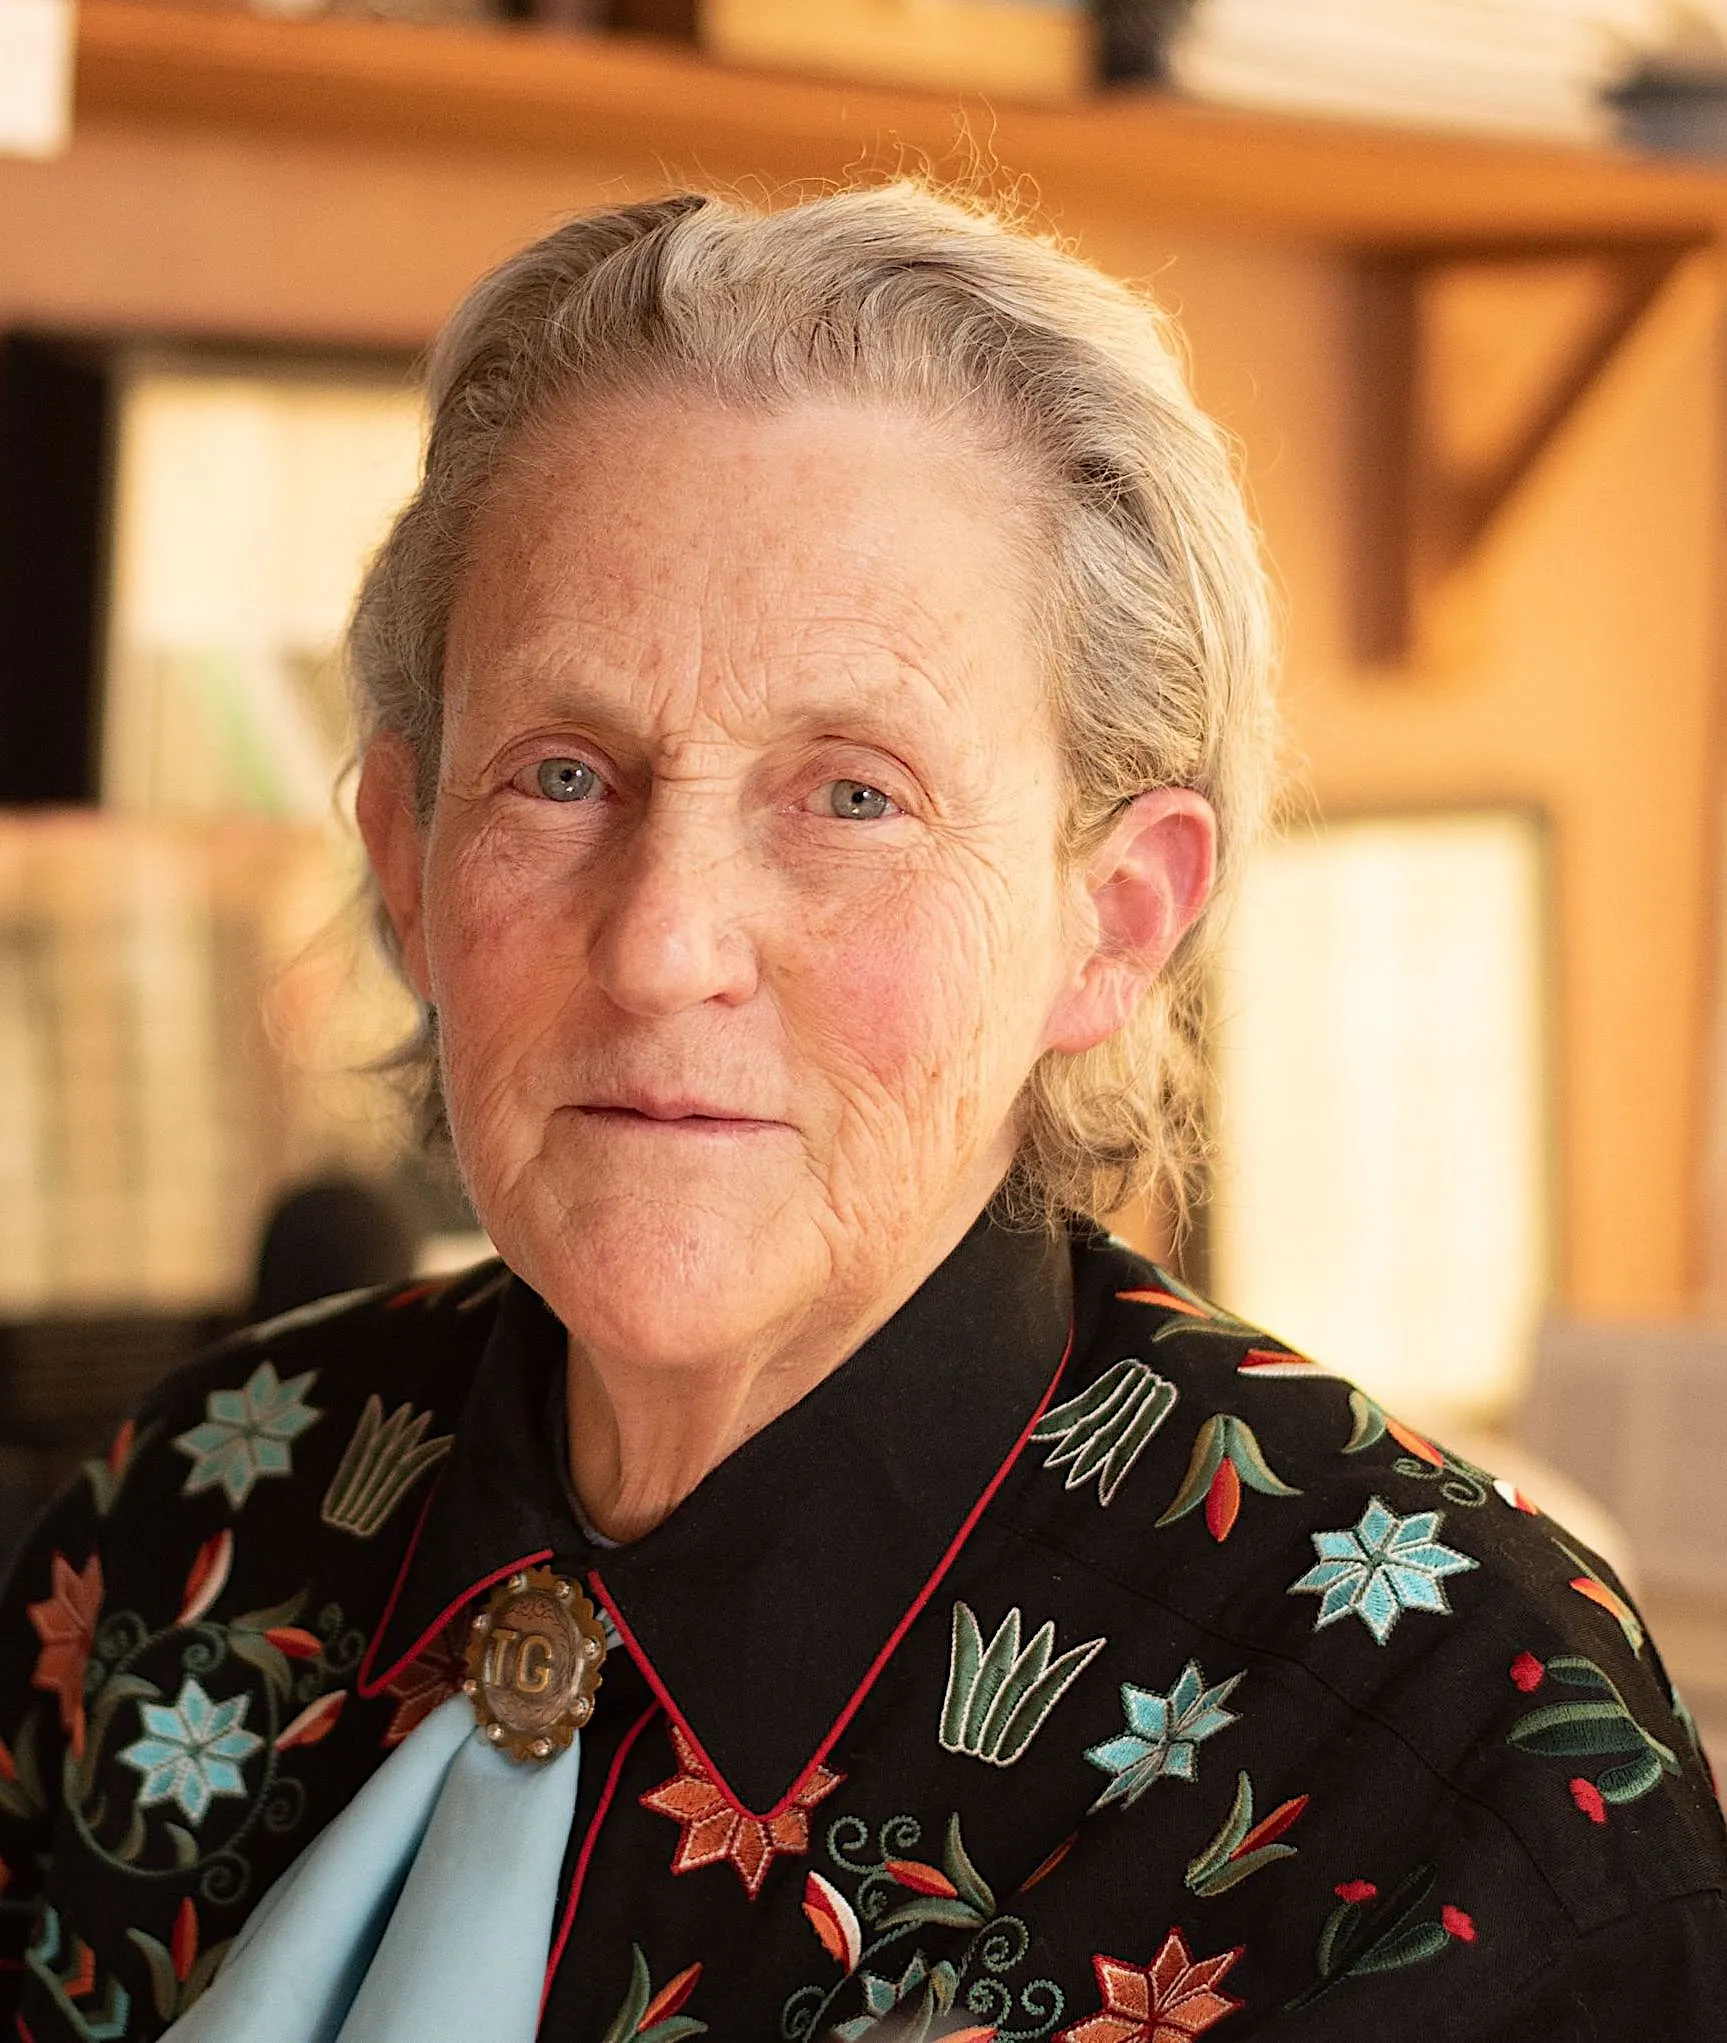 The Global Exchange Conference Presenter - Temple Grandin - Portrait Photo